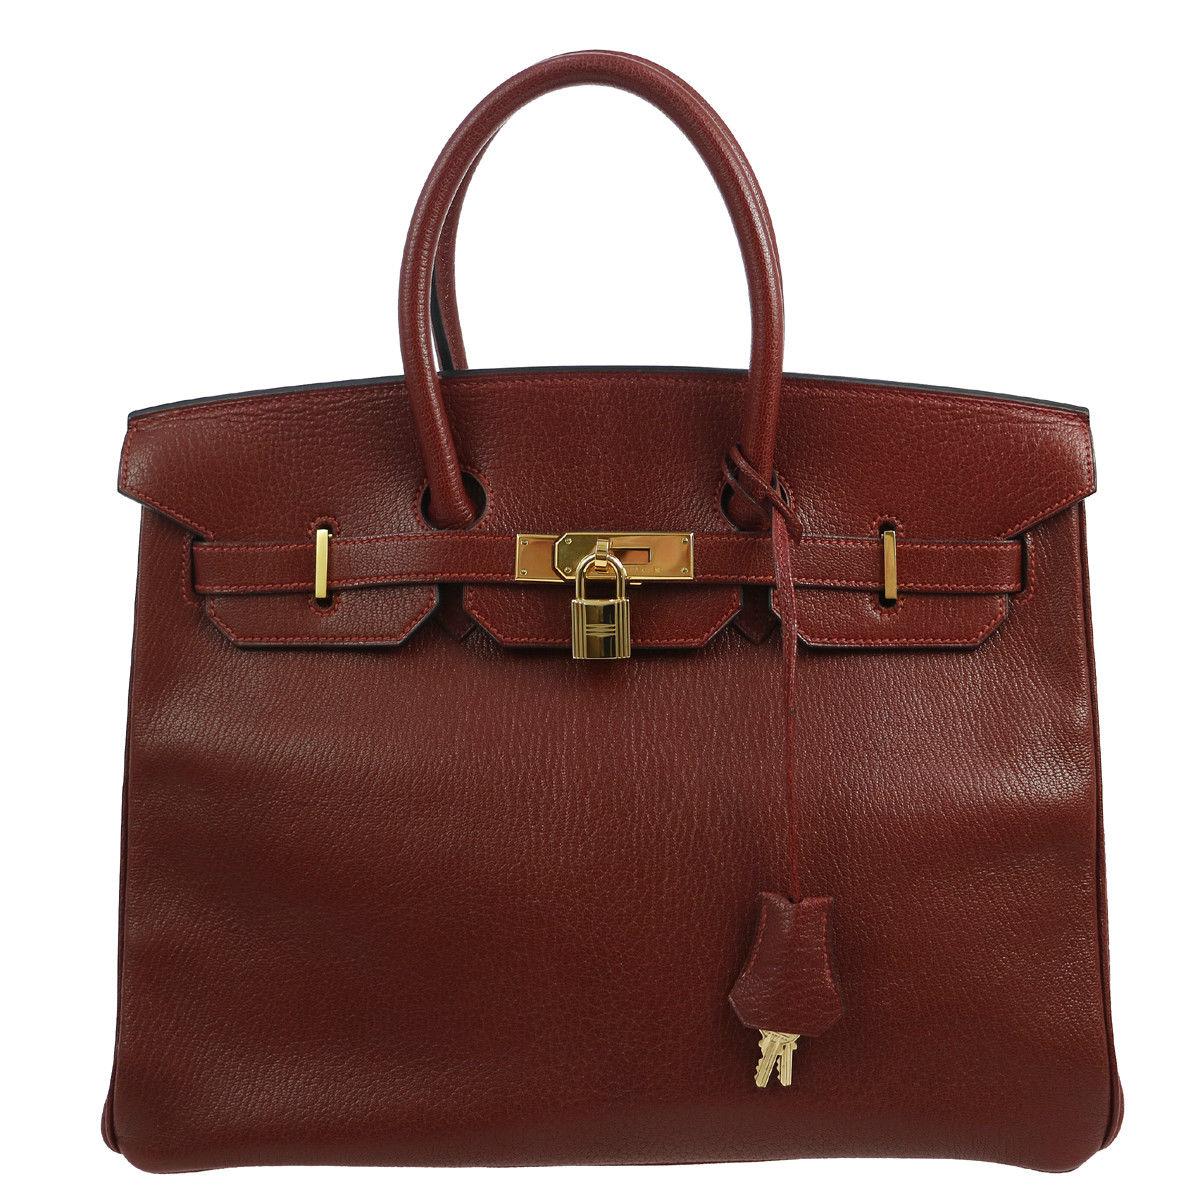 Hermes Birkin 35 Bordeaux Wine Leather Top Handle Satchel Travel Shoulder Bag